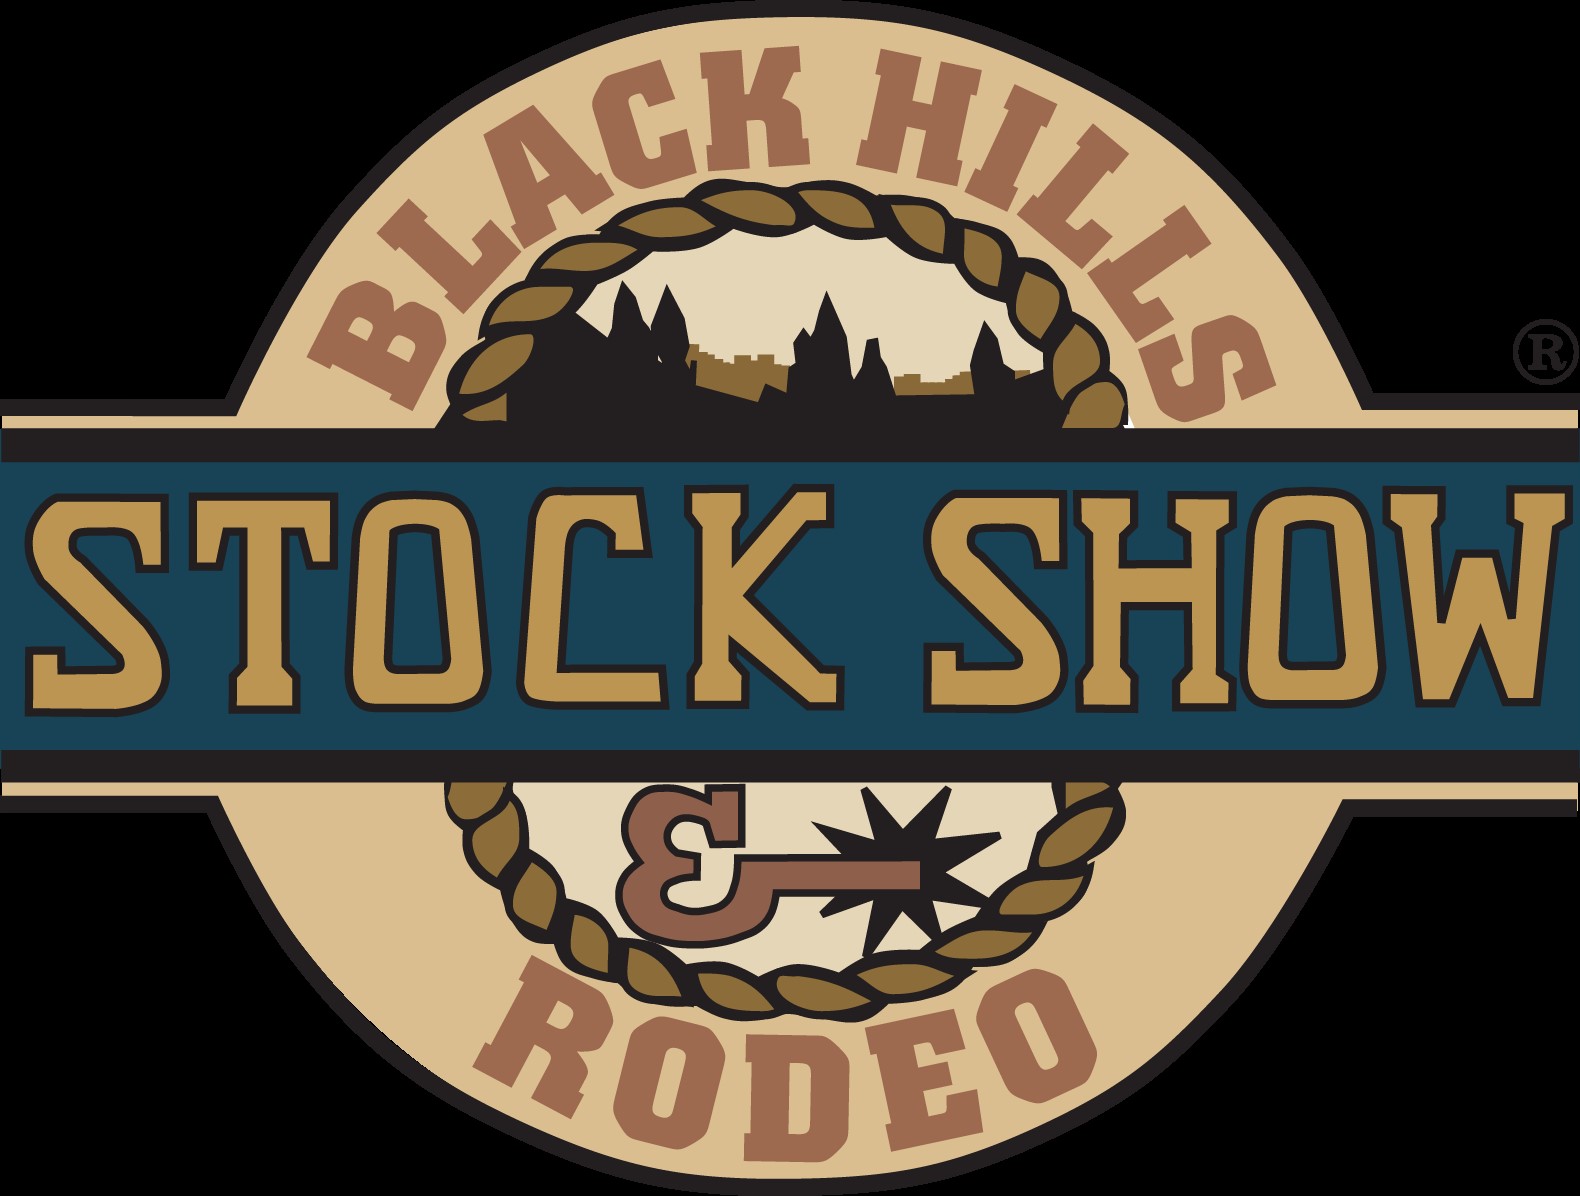 Black Hills Stock Show Rapid City South Dakota Stocks Walls